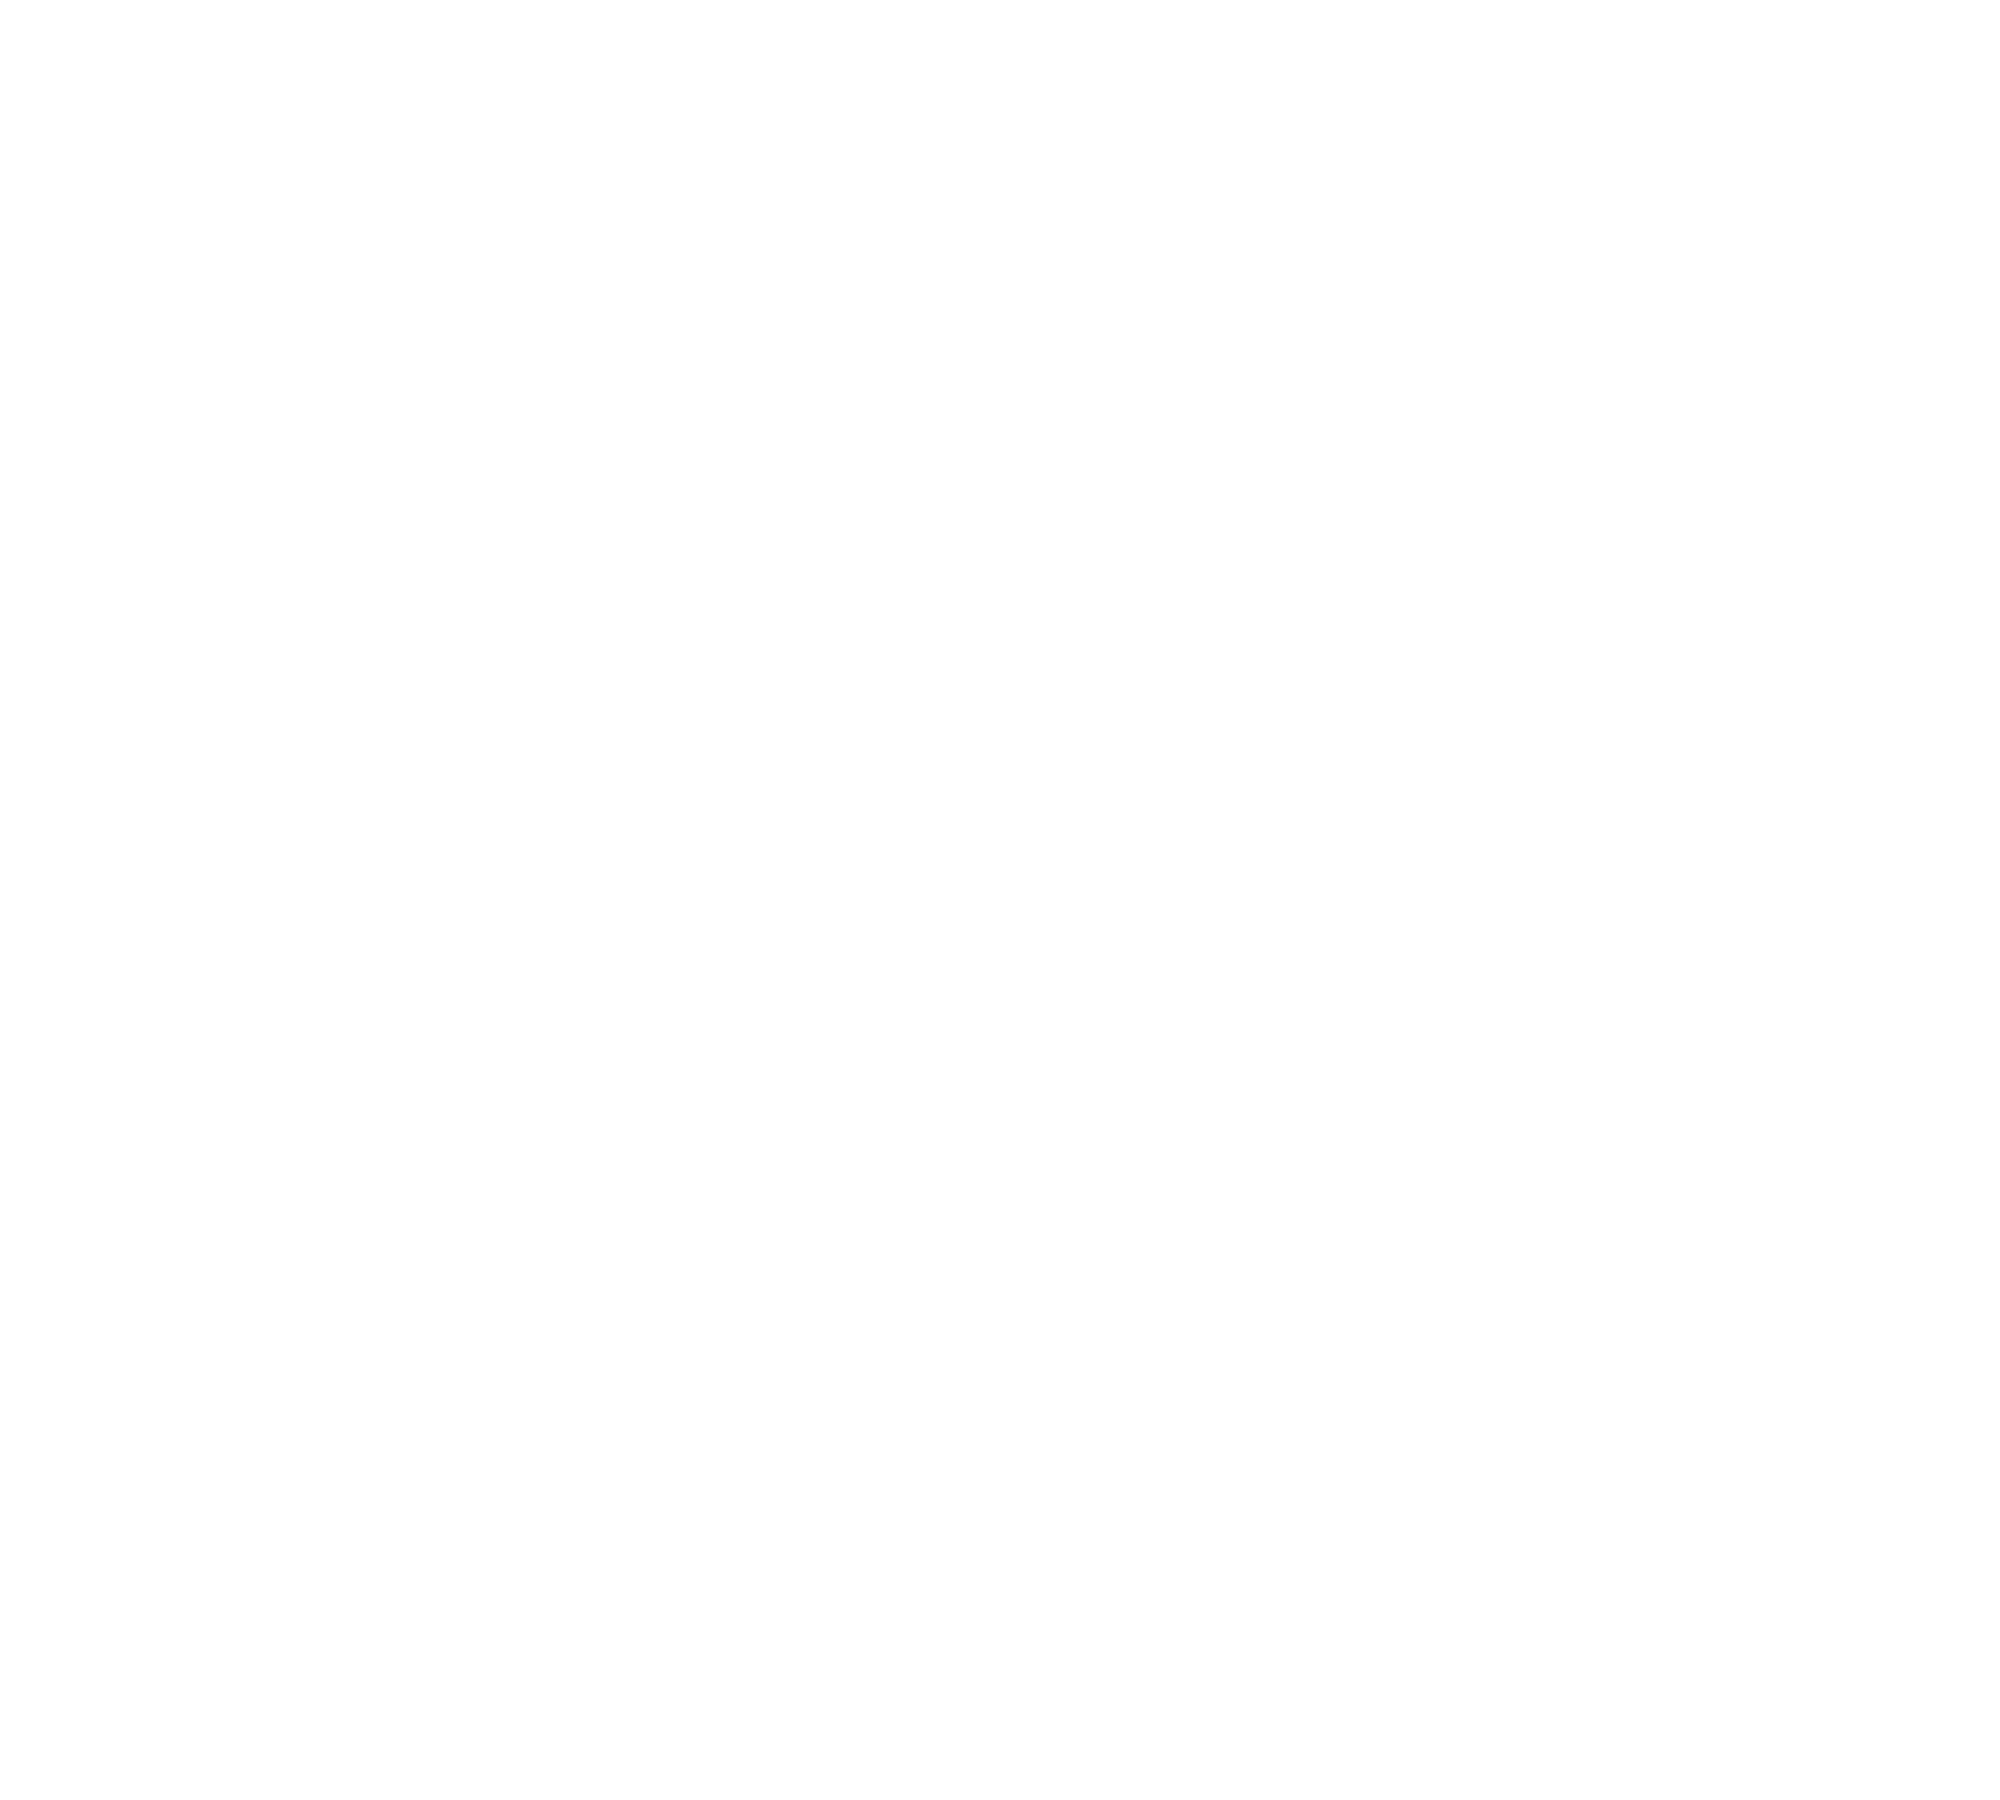 Onix logo big white